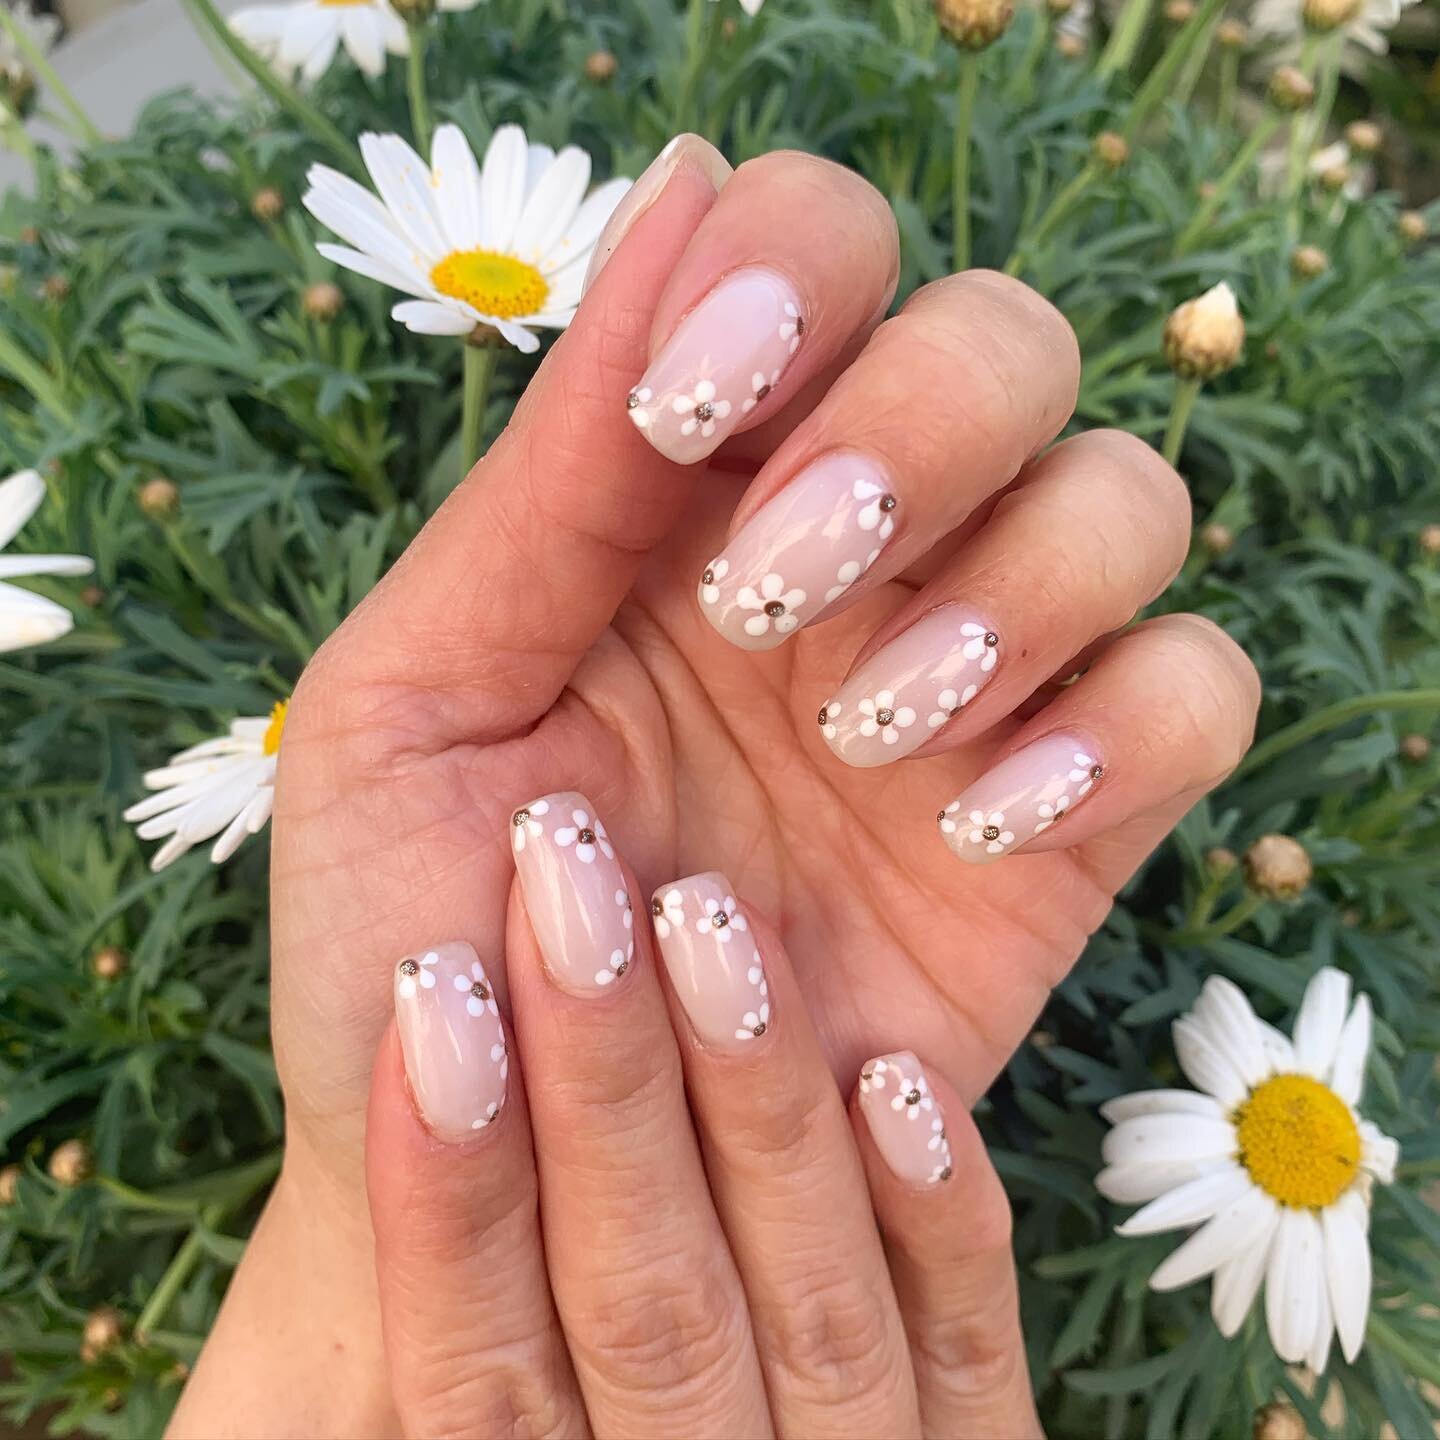 It&rsquo;s flower season! 

#nails #nailart #manicure #gelnails #nailstagram #nailswhitetip #nailcolourtip  #nailstyle #nailsart #naildesign #inspire #acrylicnails #gel #nailsnailsnails #nailtech #pedicure #gelpolish #nailinspo #flowernails #flowerpa